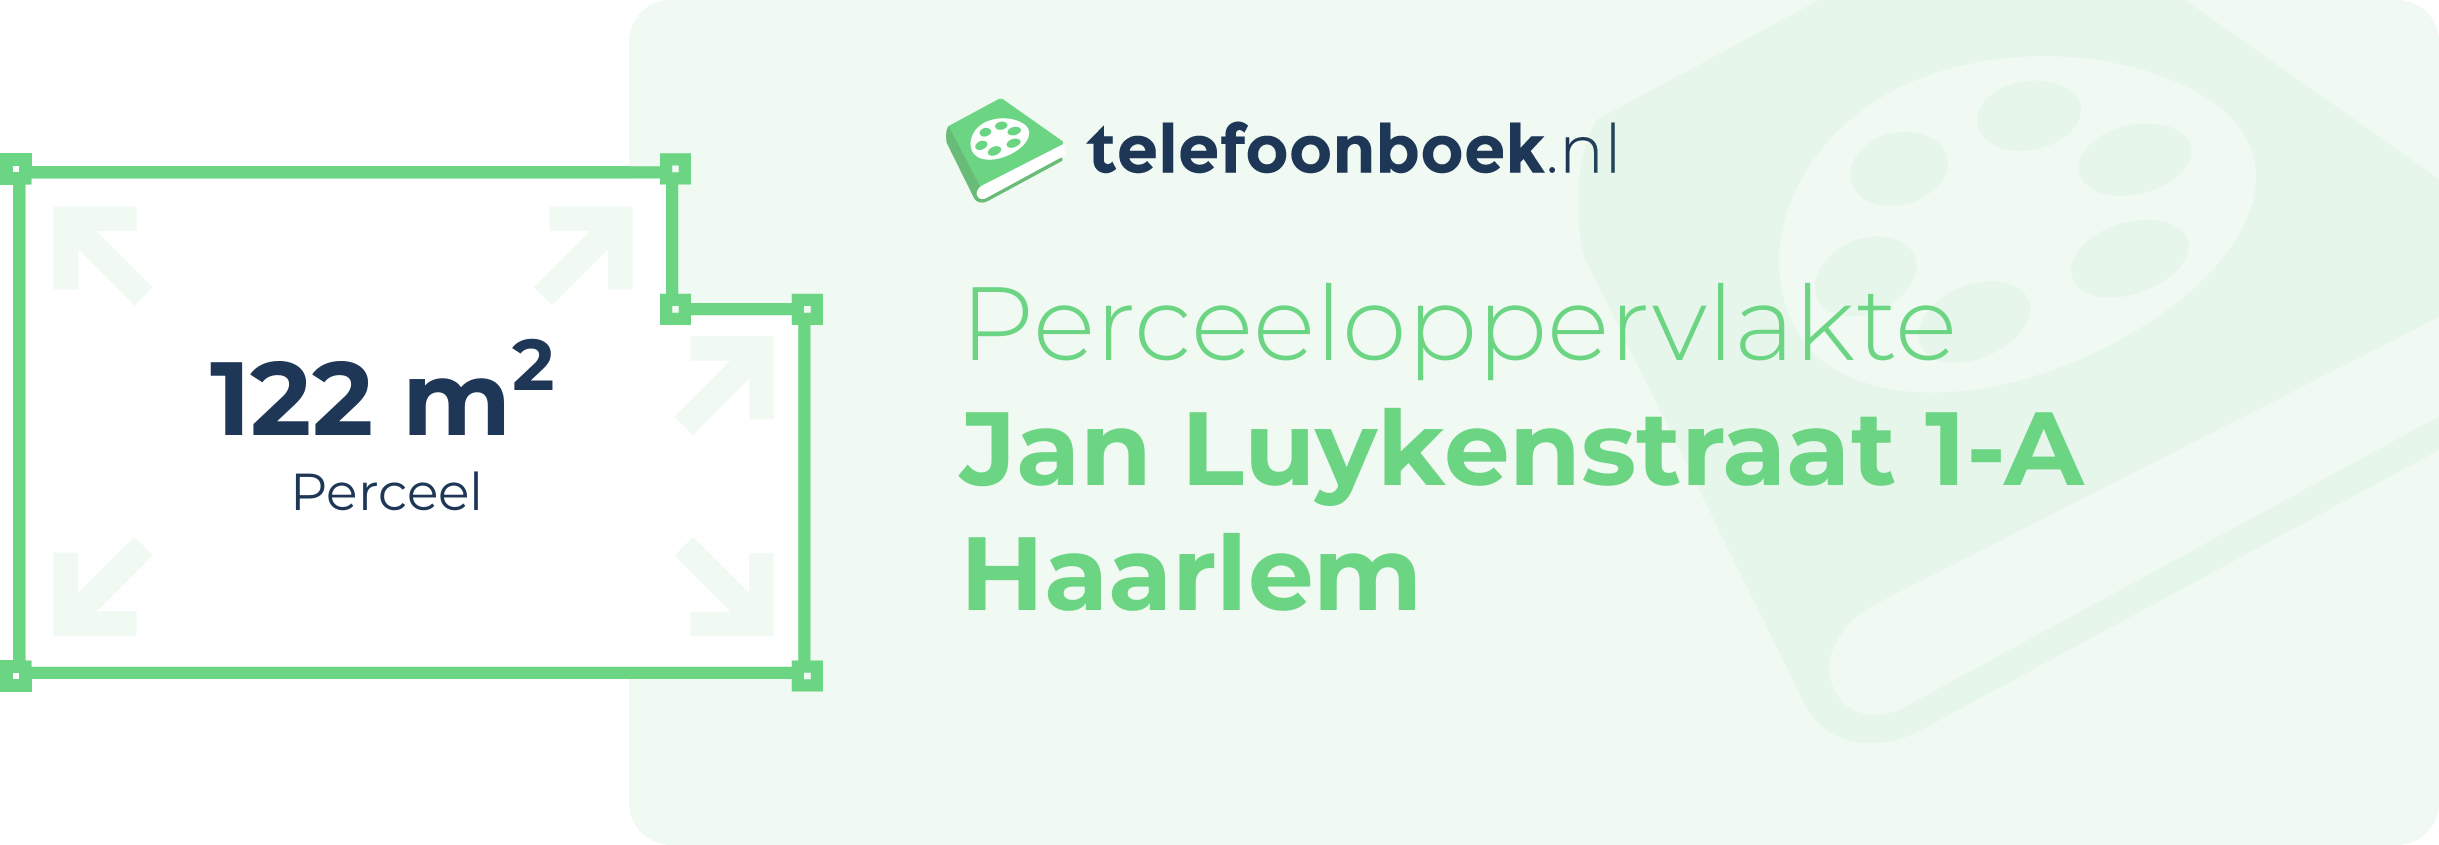 Perceeloppervlakte Jan Luykenstraat 1-A Haarlem